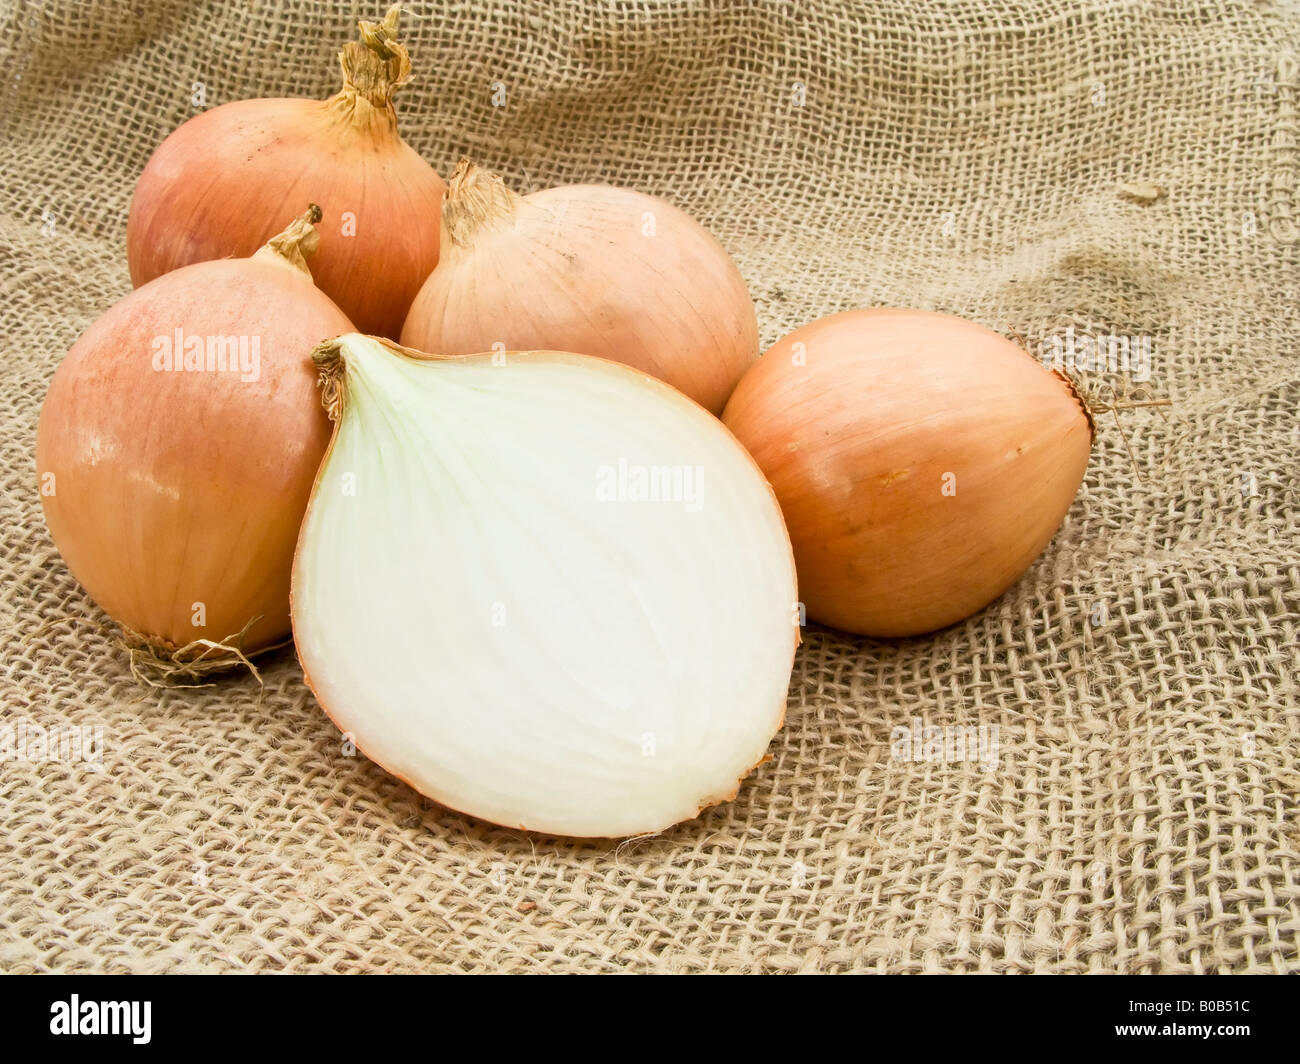 Onion pile over a burlap sack Stock Photo